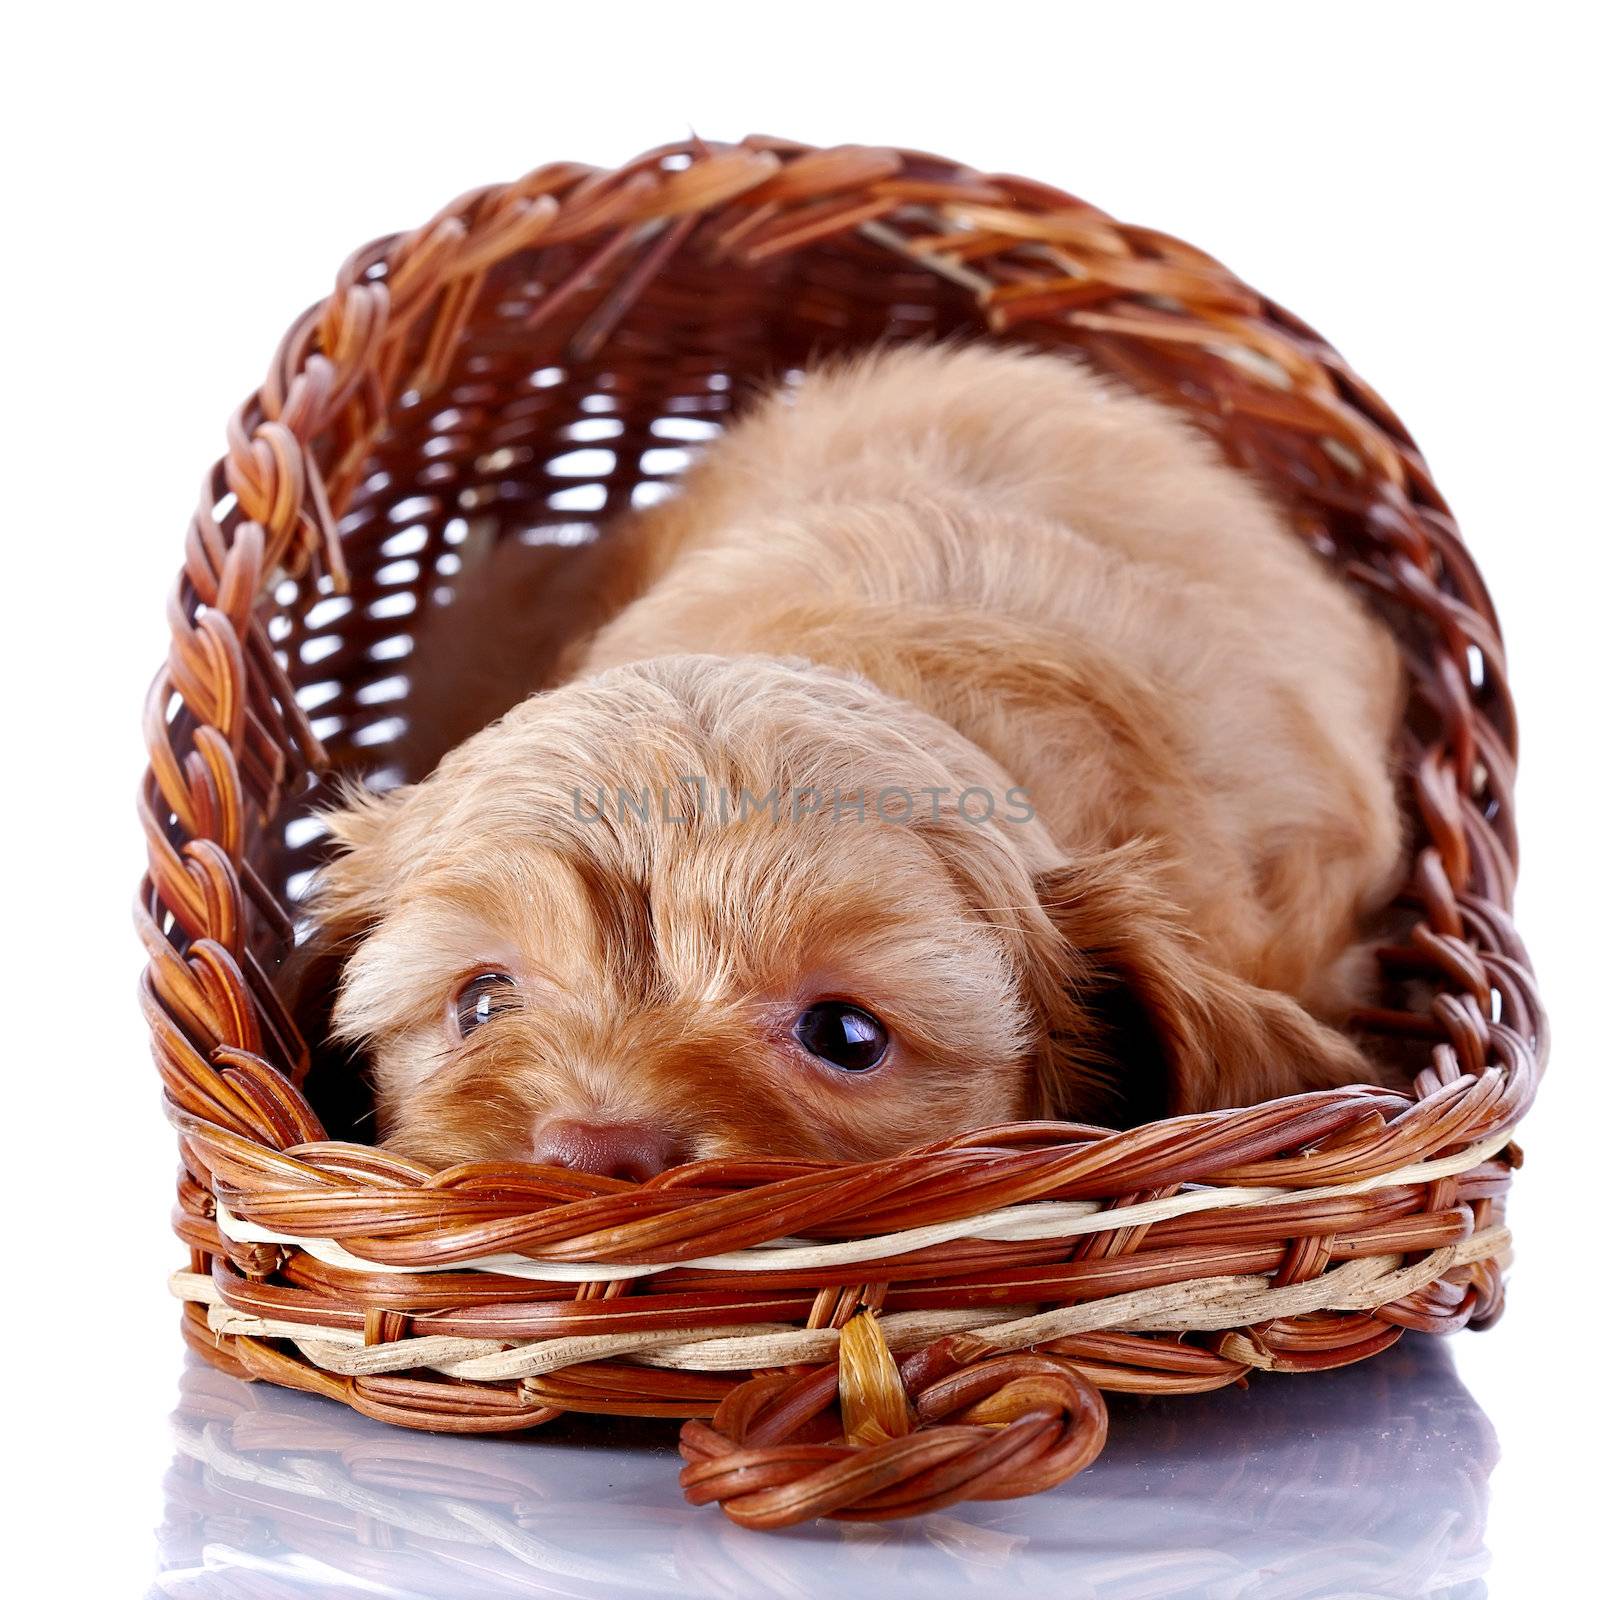 Puppy of a decorative doggie in a wattled basket. by Azaliya